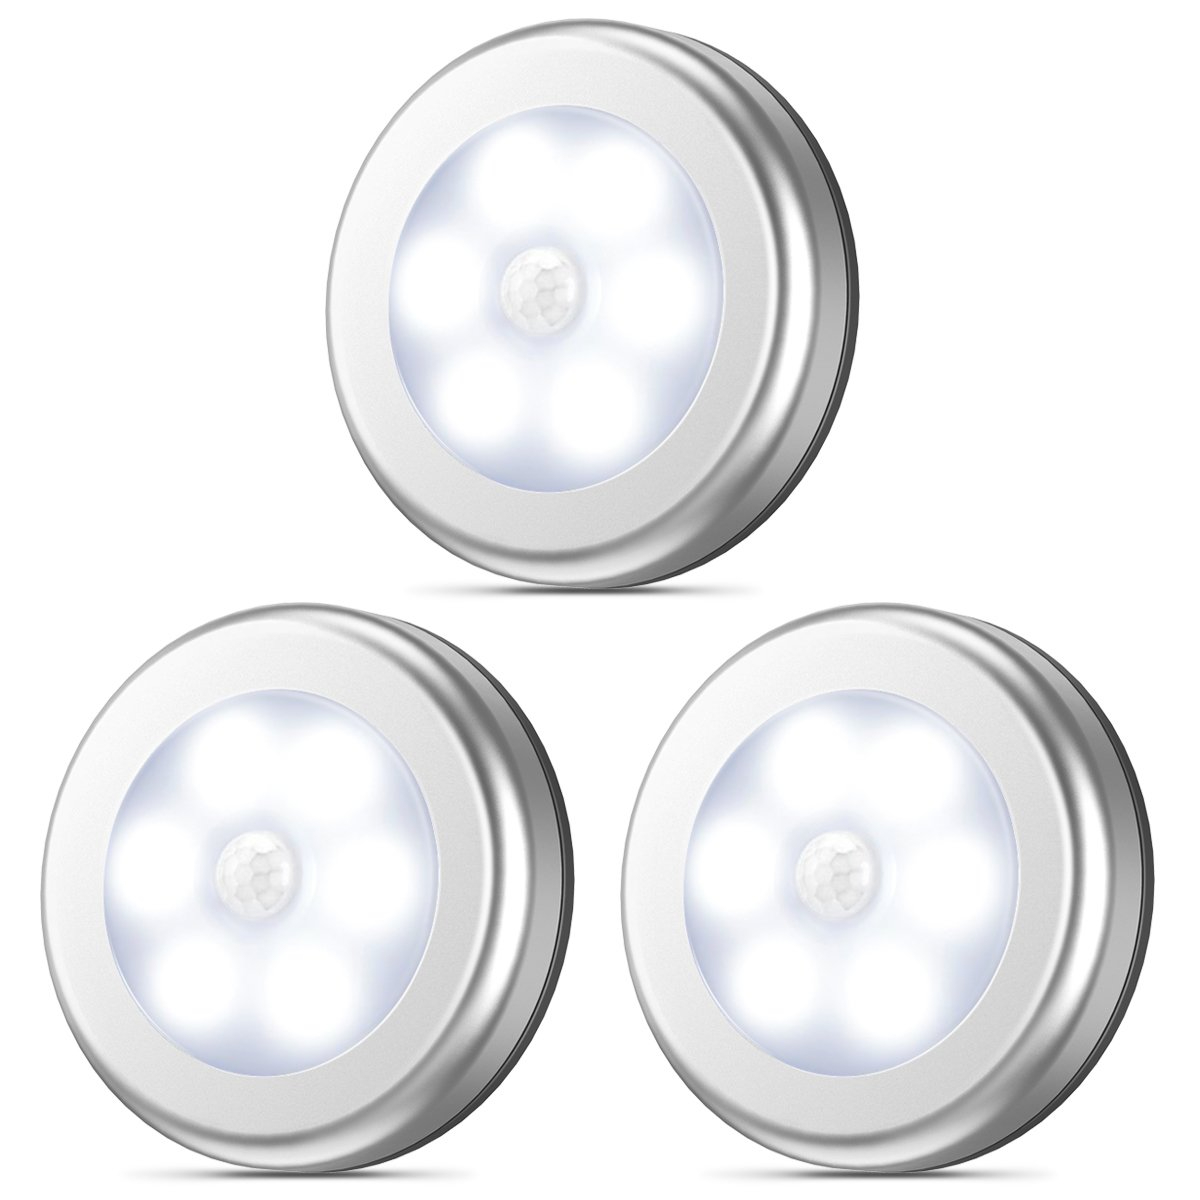 Motion Sensor Light, Stick-Anywhere Cordless Battery-Powered LED Night Light, Closet Lights，Stair Lights, Tap Lights, Safe Lights for Hallway, Bathroom, Bedroom, Kitchen (Silver/White - Pack of 3)